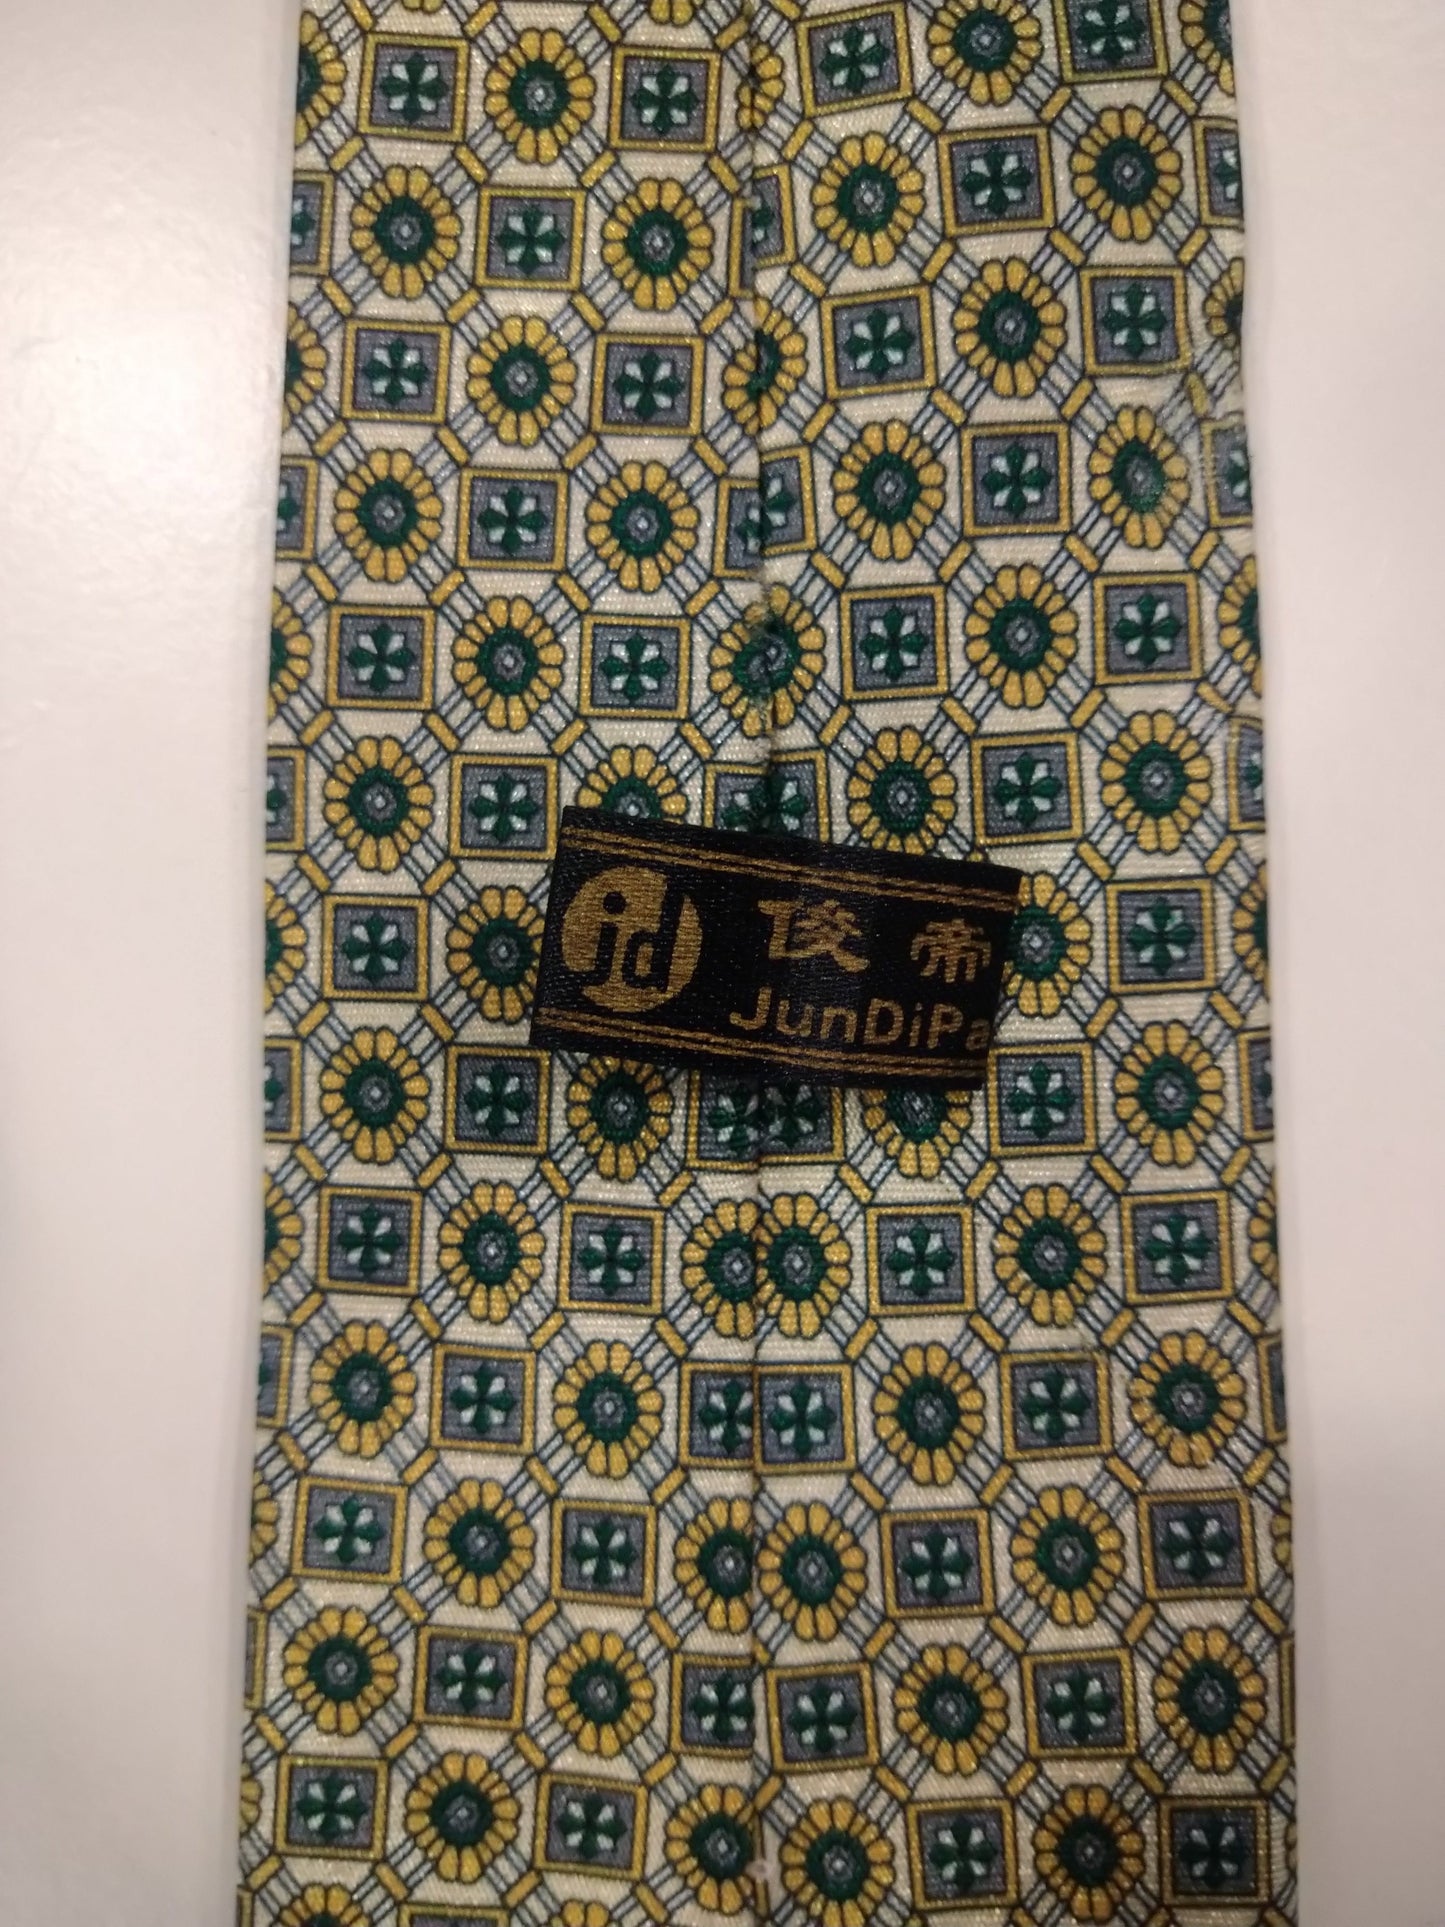 Jundipai soft polyester tie. Green beige gold shiny motif.